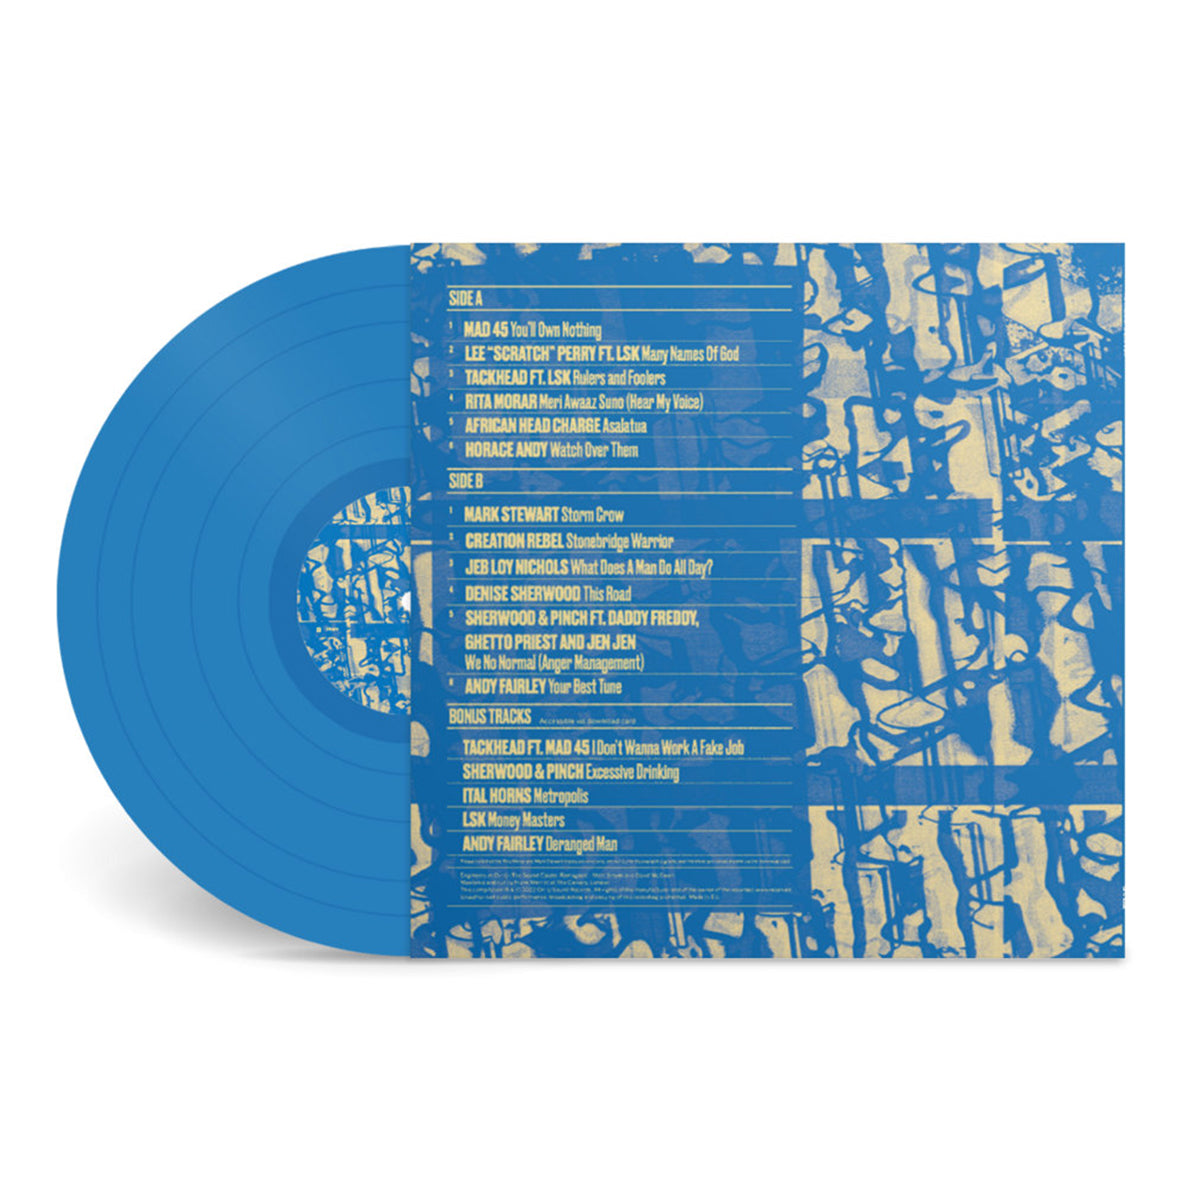 VARIOUS - Pay It All Back Vol 8 - LP + Poster - Transparent Blue Vinyl